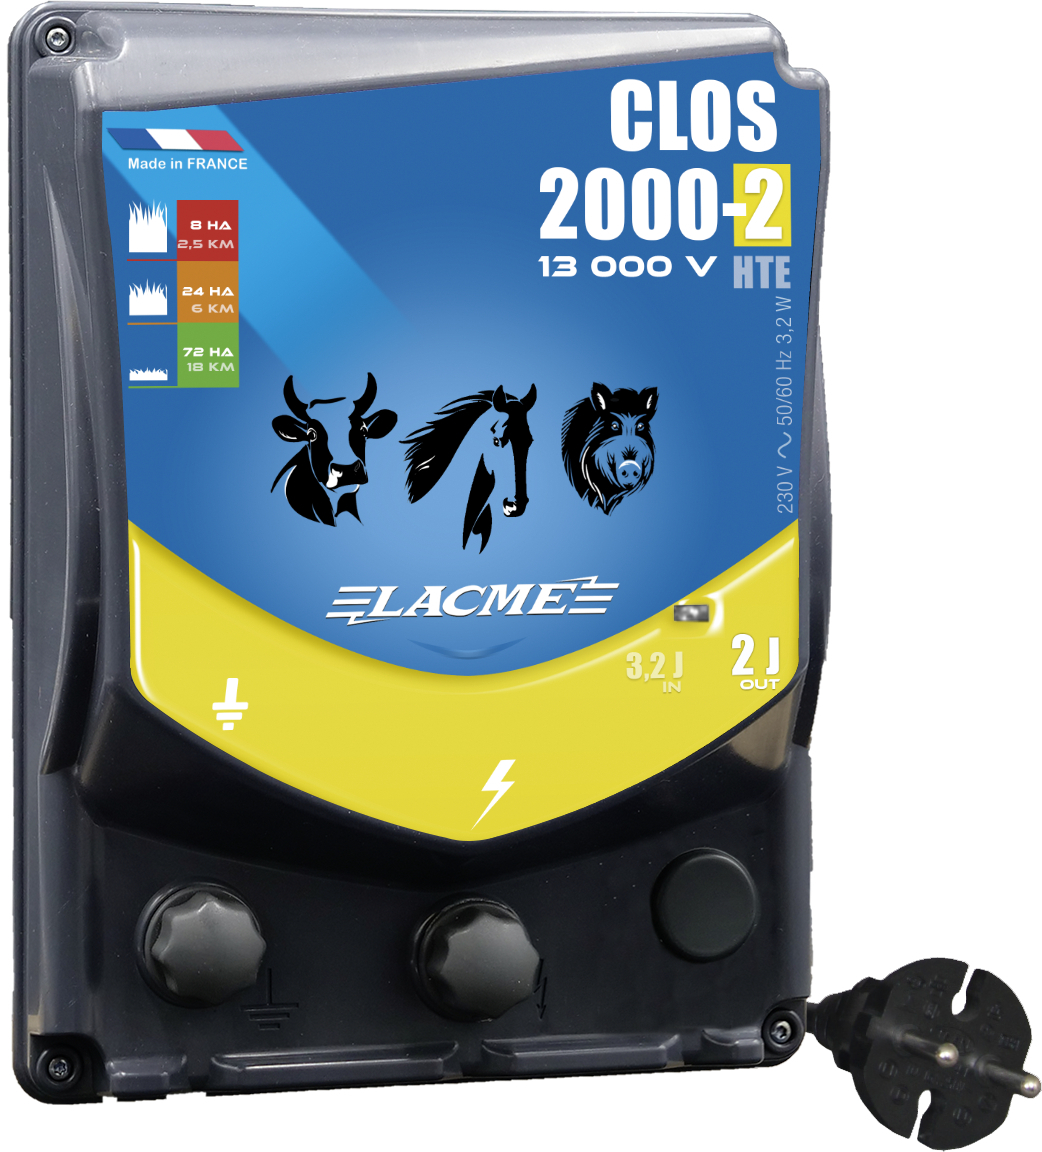 Lacmé Clos Netzgerät mit 2 Joule Leistung